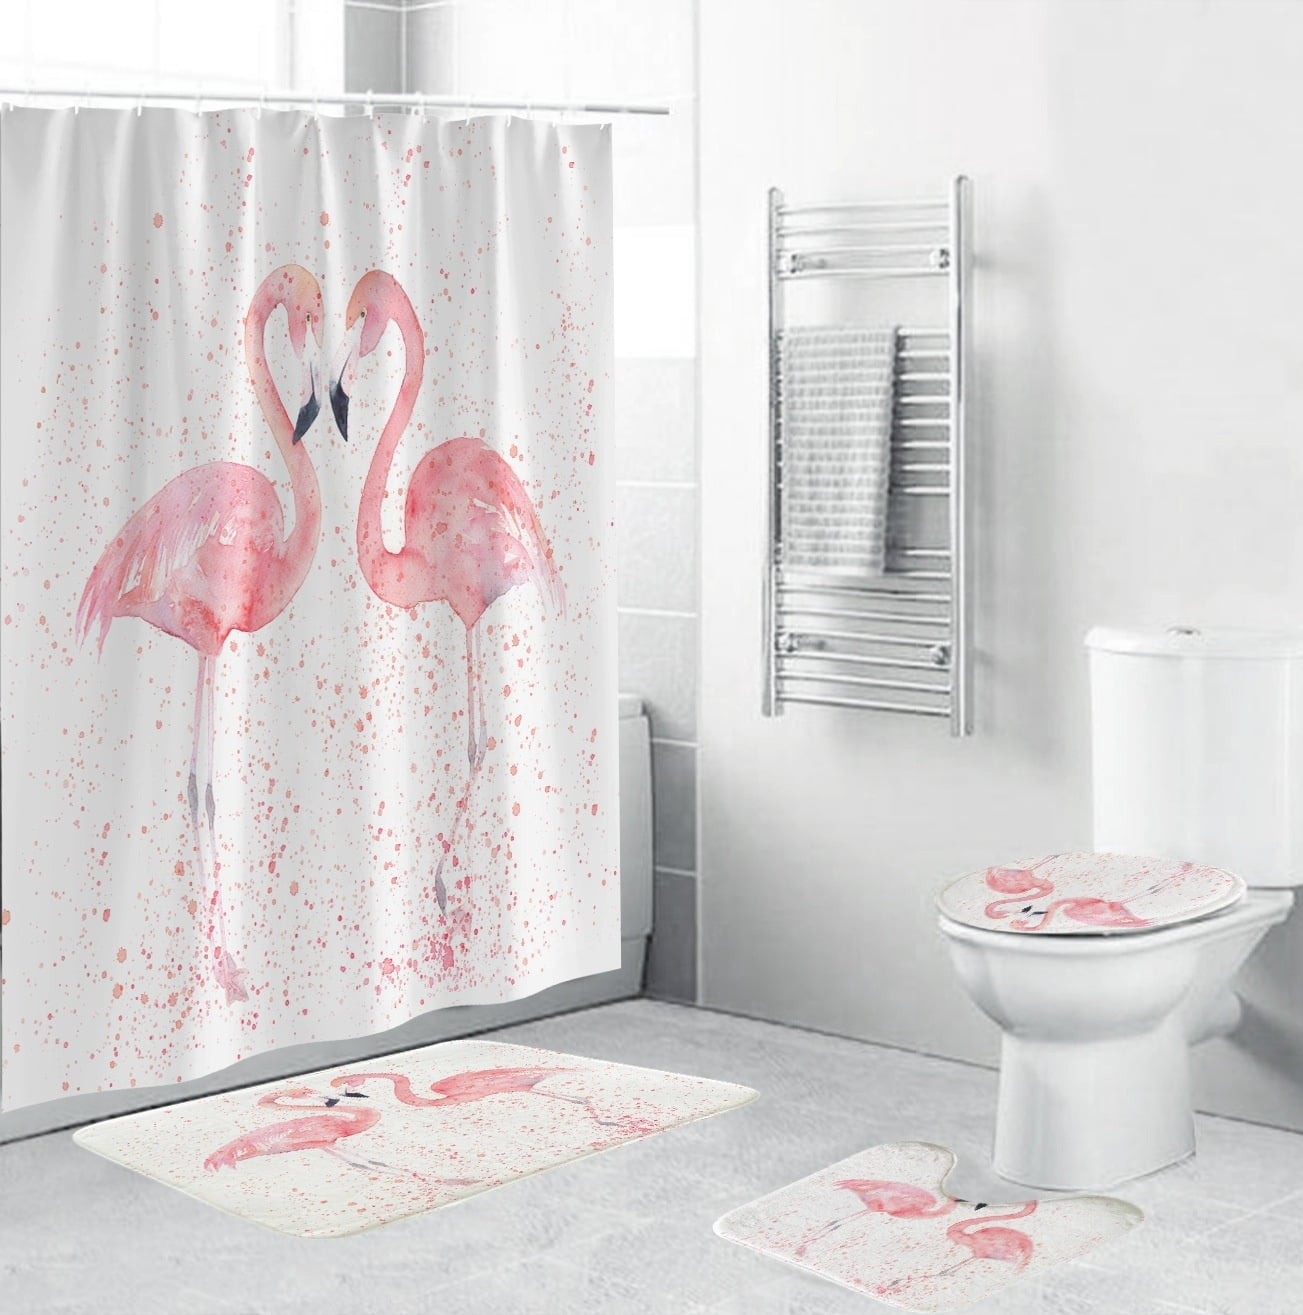 Flamingo Bath Shower Curtains Waterproof Bathroom Set Exotic Fabric Shower Curtain With Accessories Or 3pcs Toilet Cover Mats Non Slip Rugs Home Decor Walmart Com Walmart Com